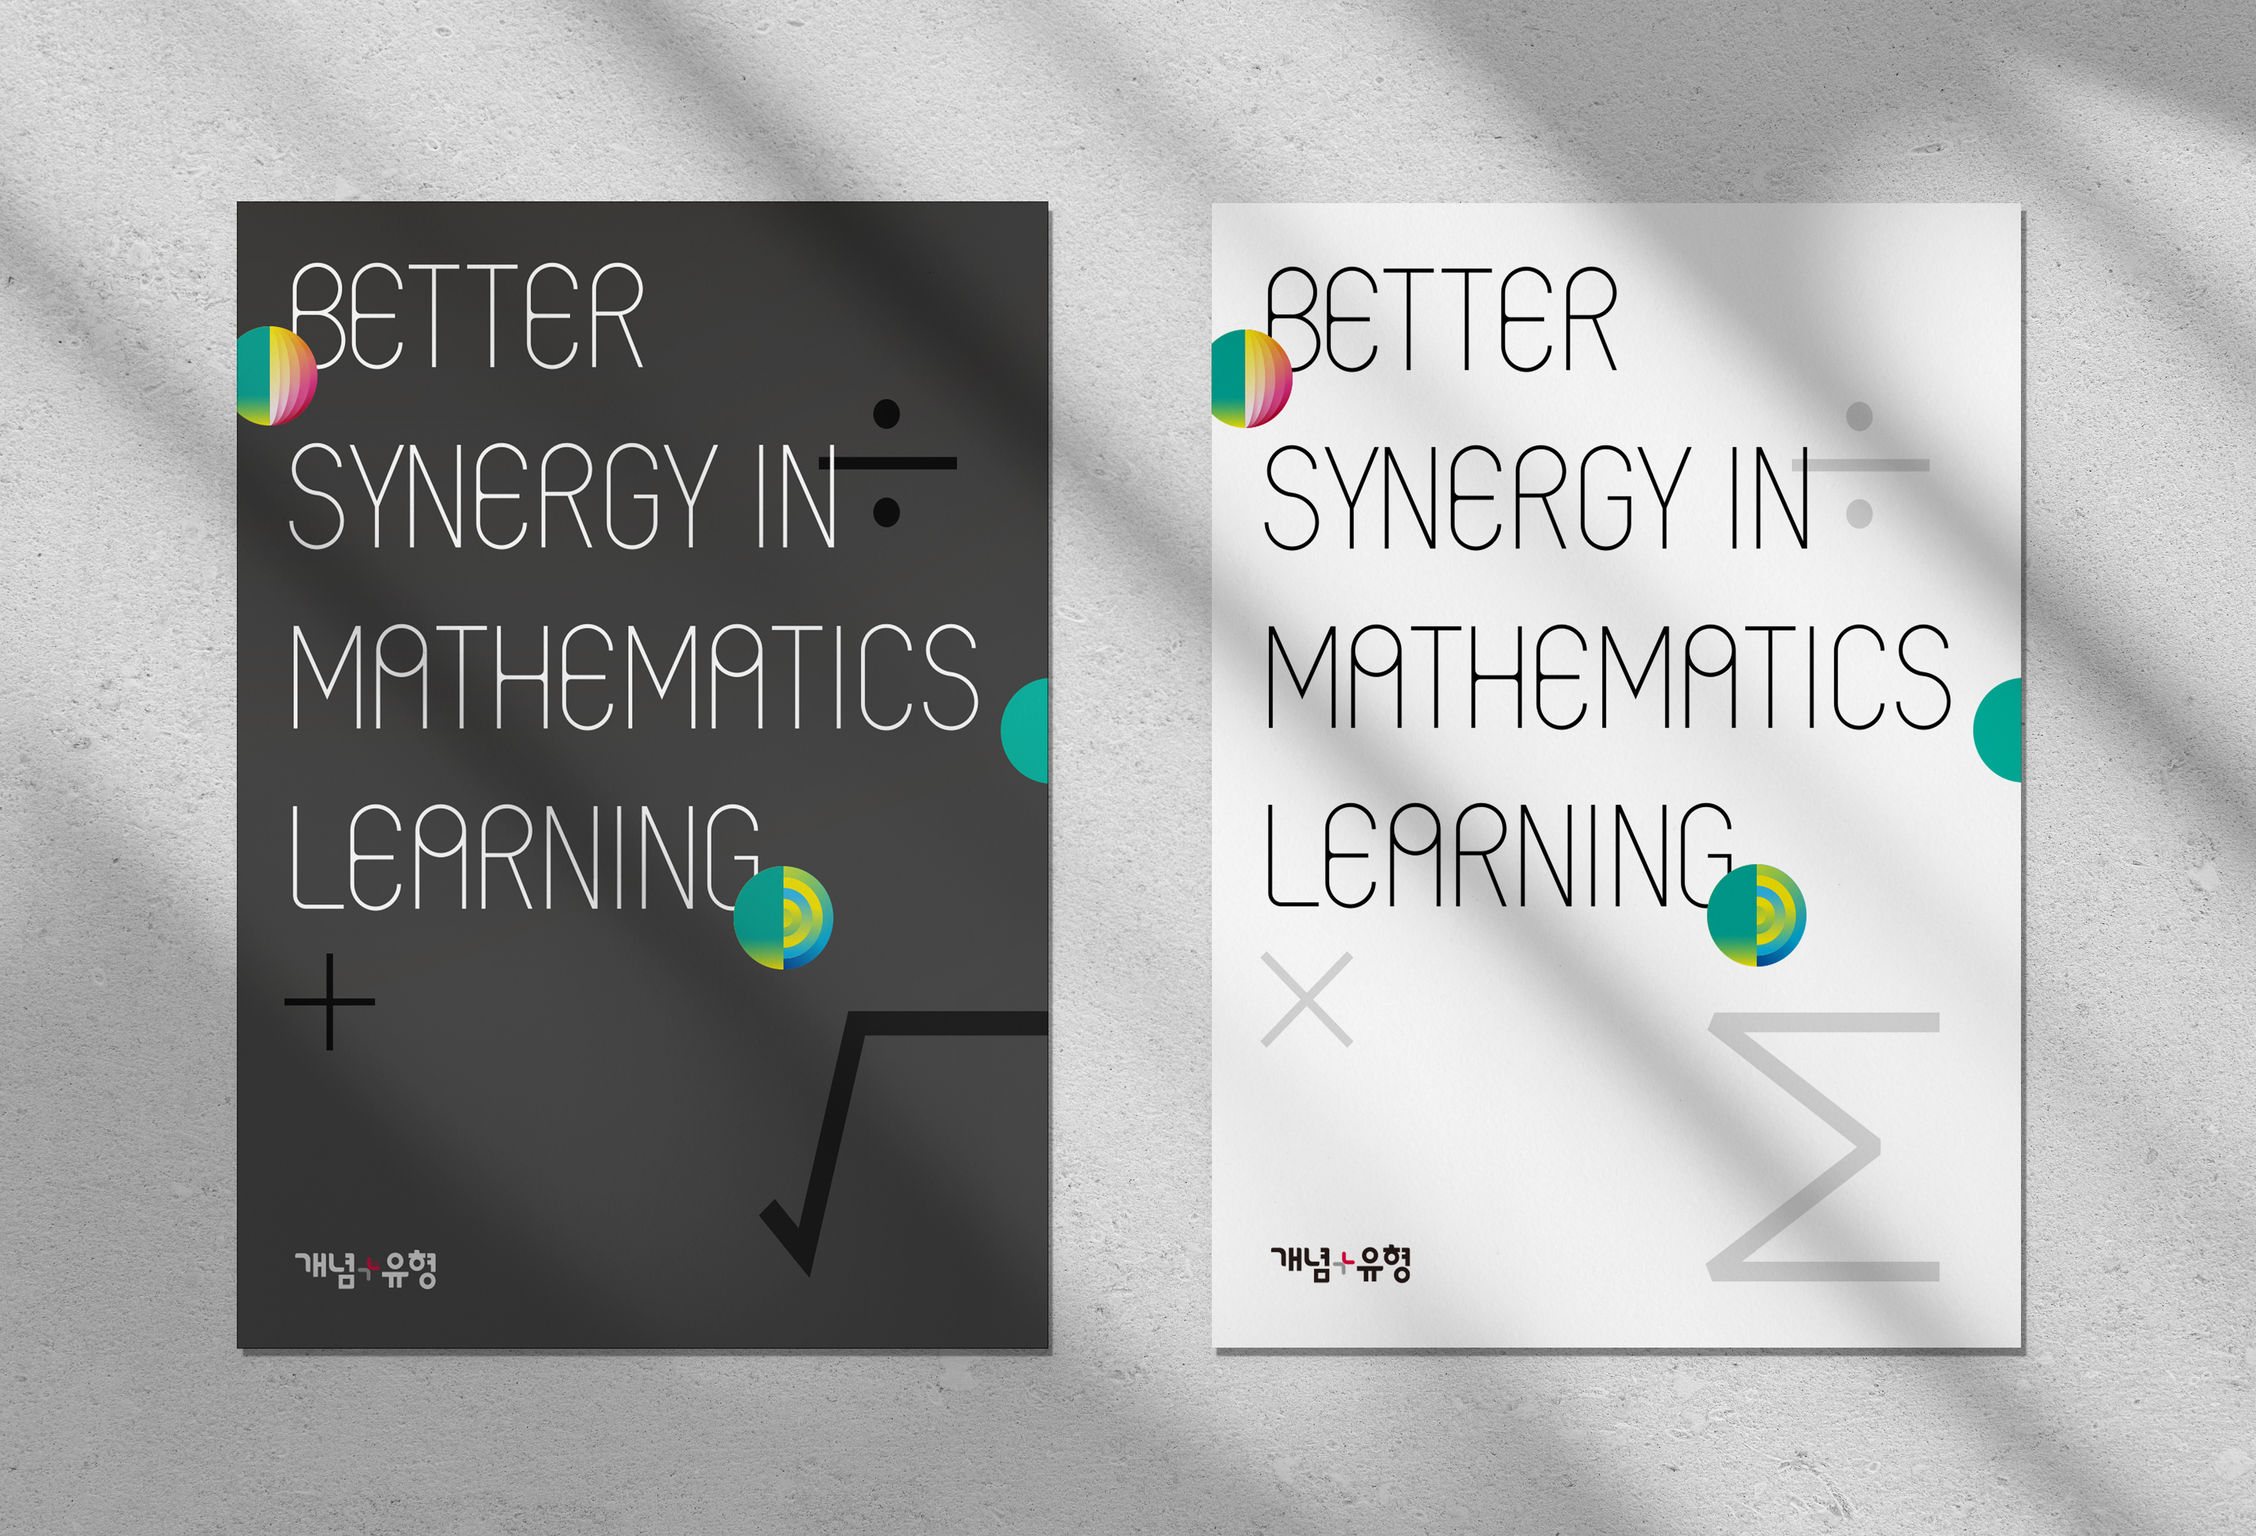 Synergy in mathematics "Gae+Yu"